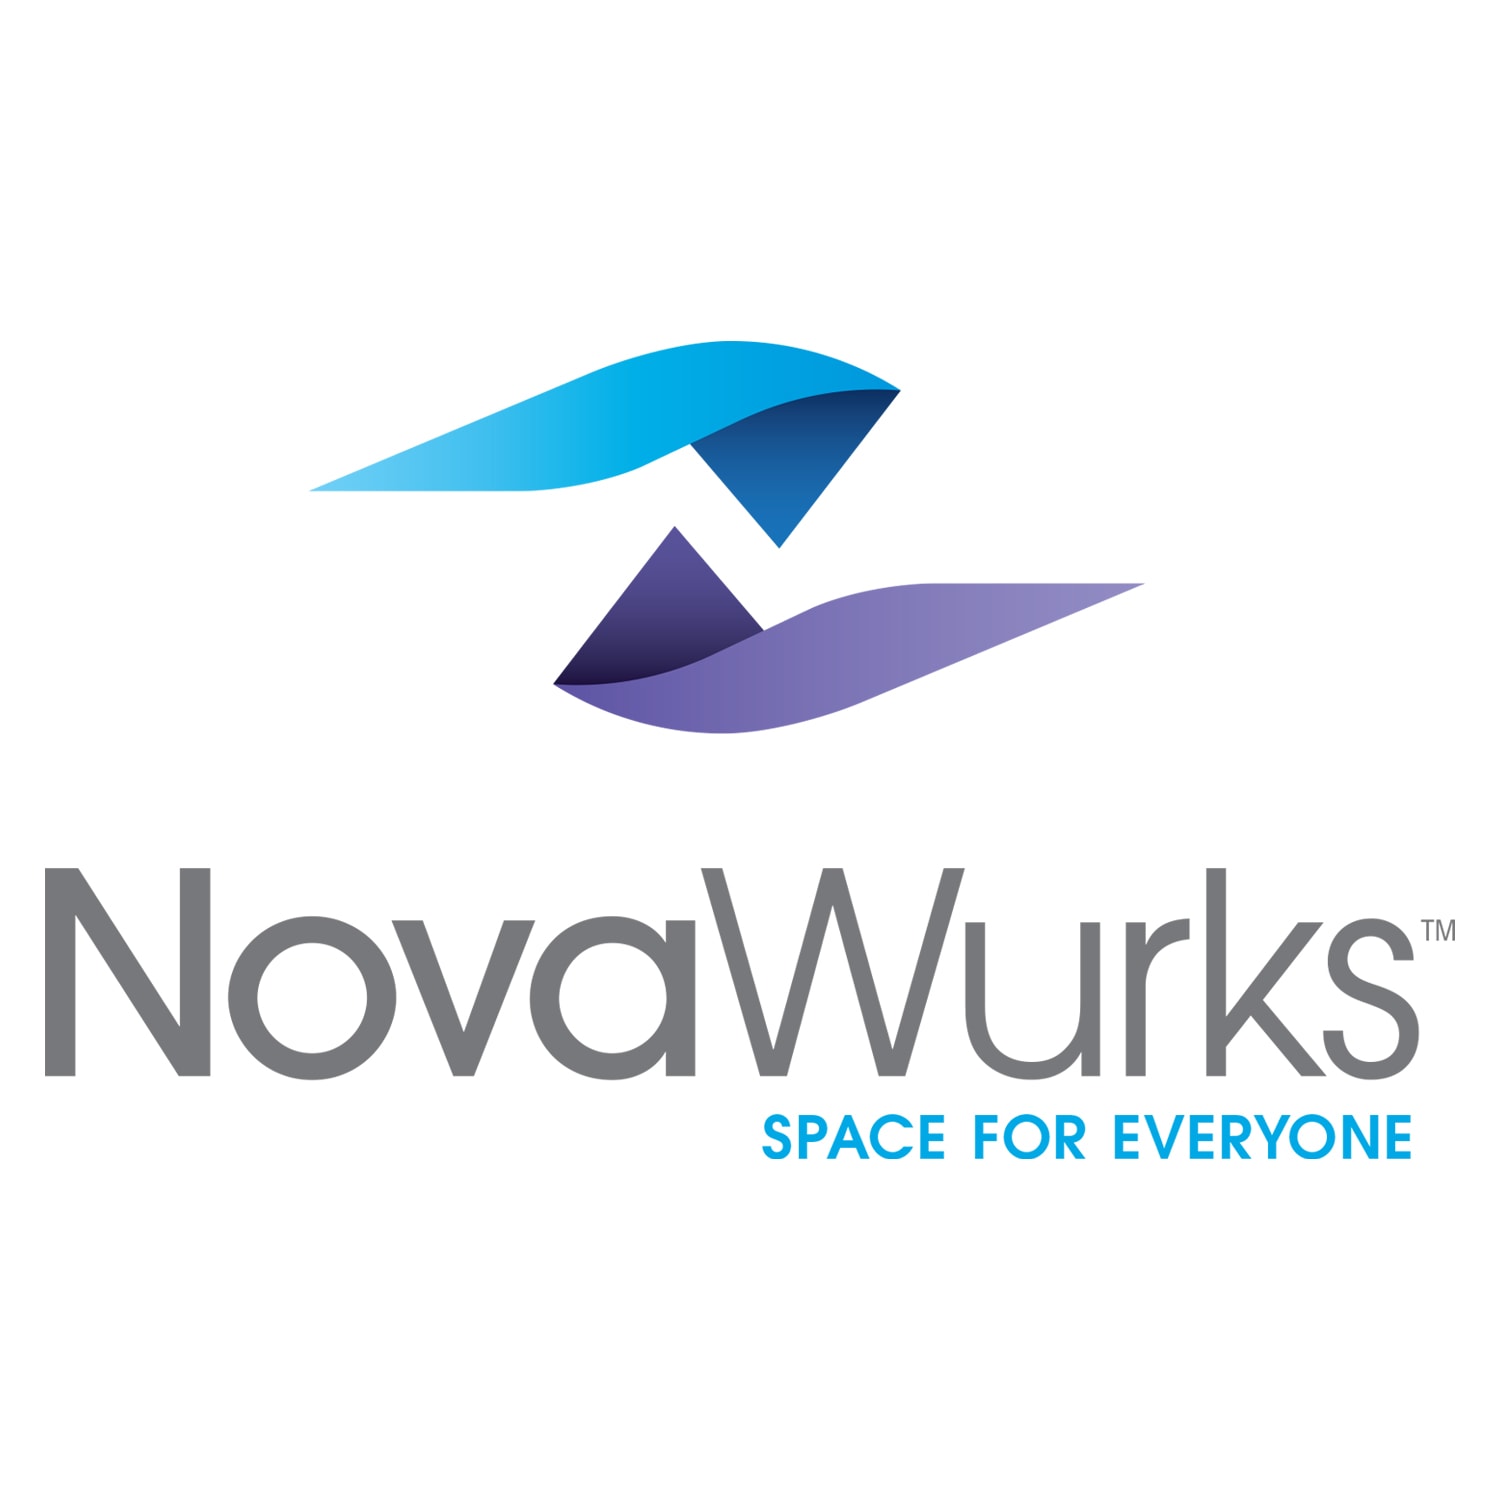 NovaWurks